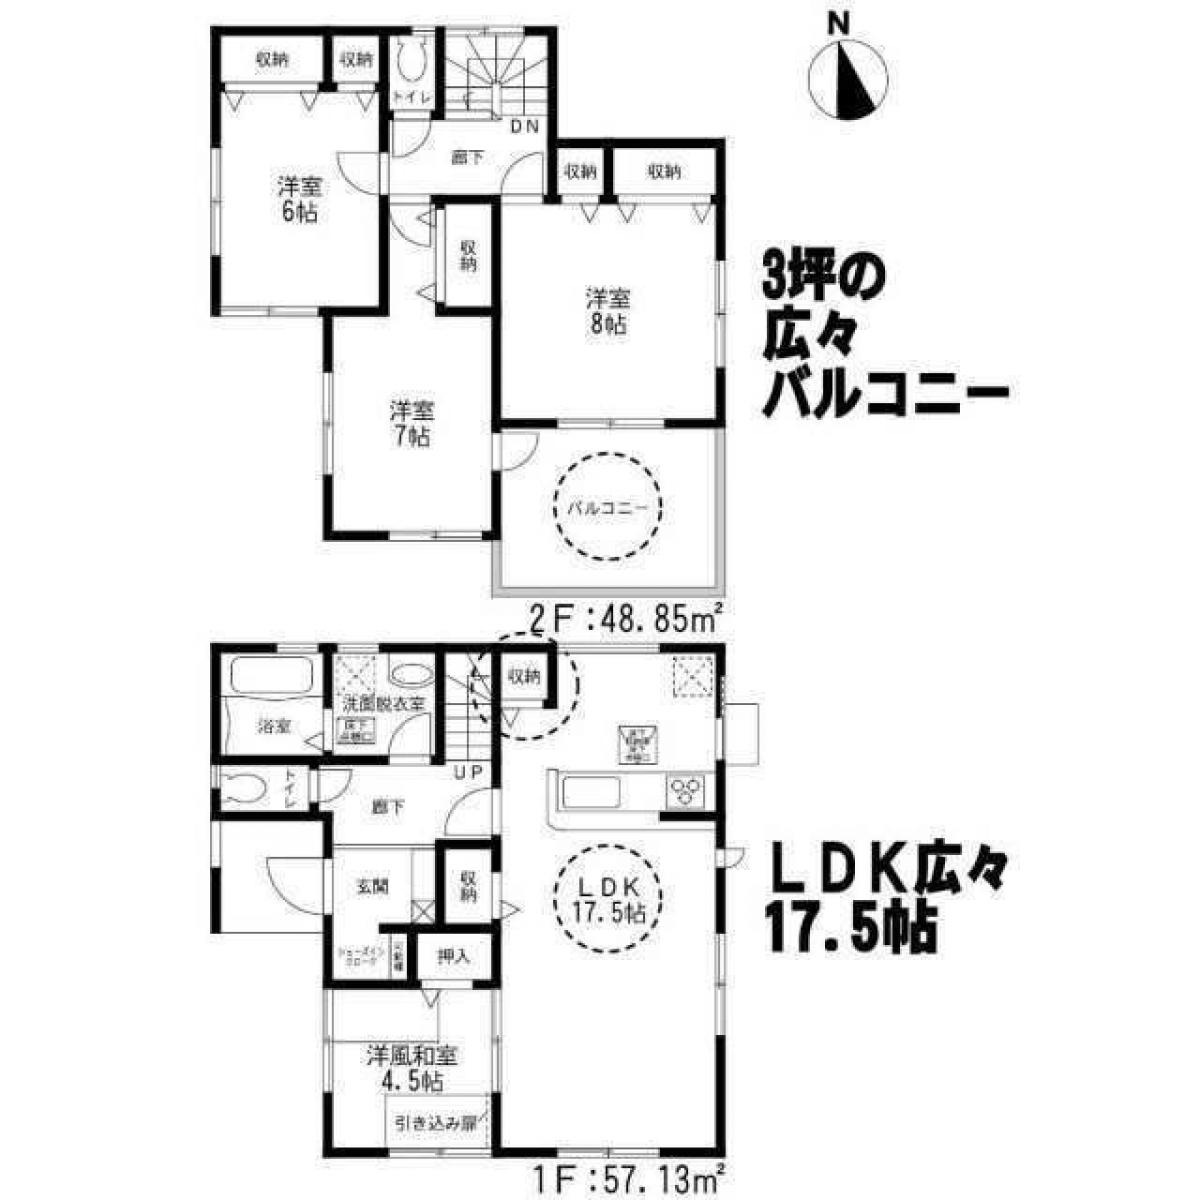 Picture of Home For Sale in Fukutsu Shi, Fukuoka, Japan